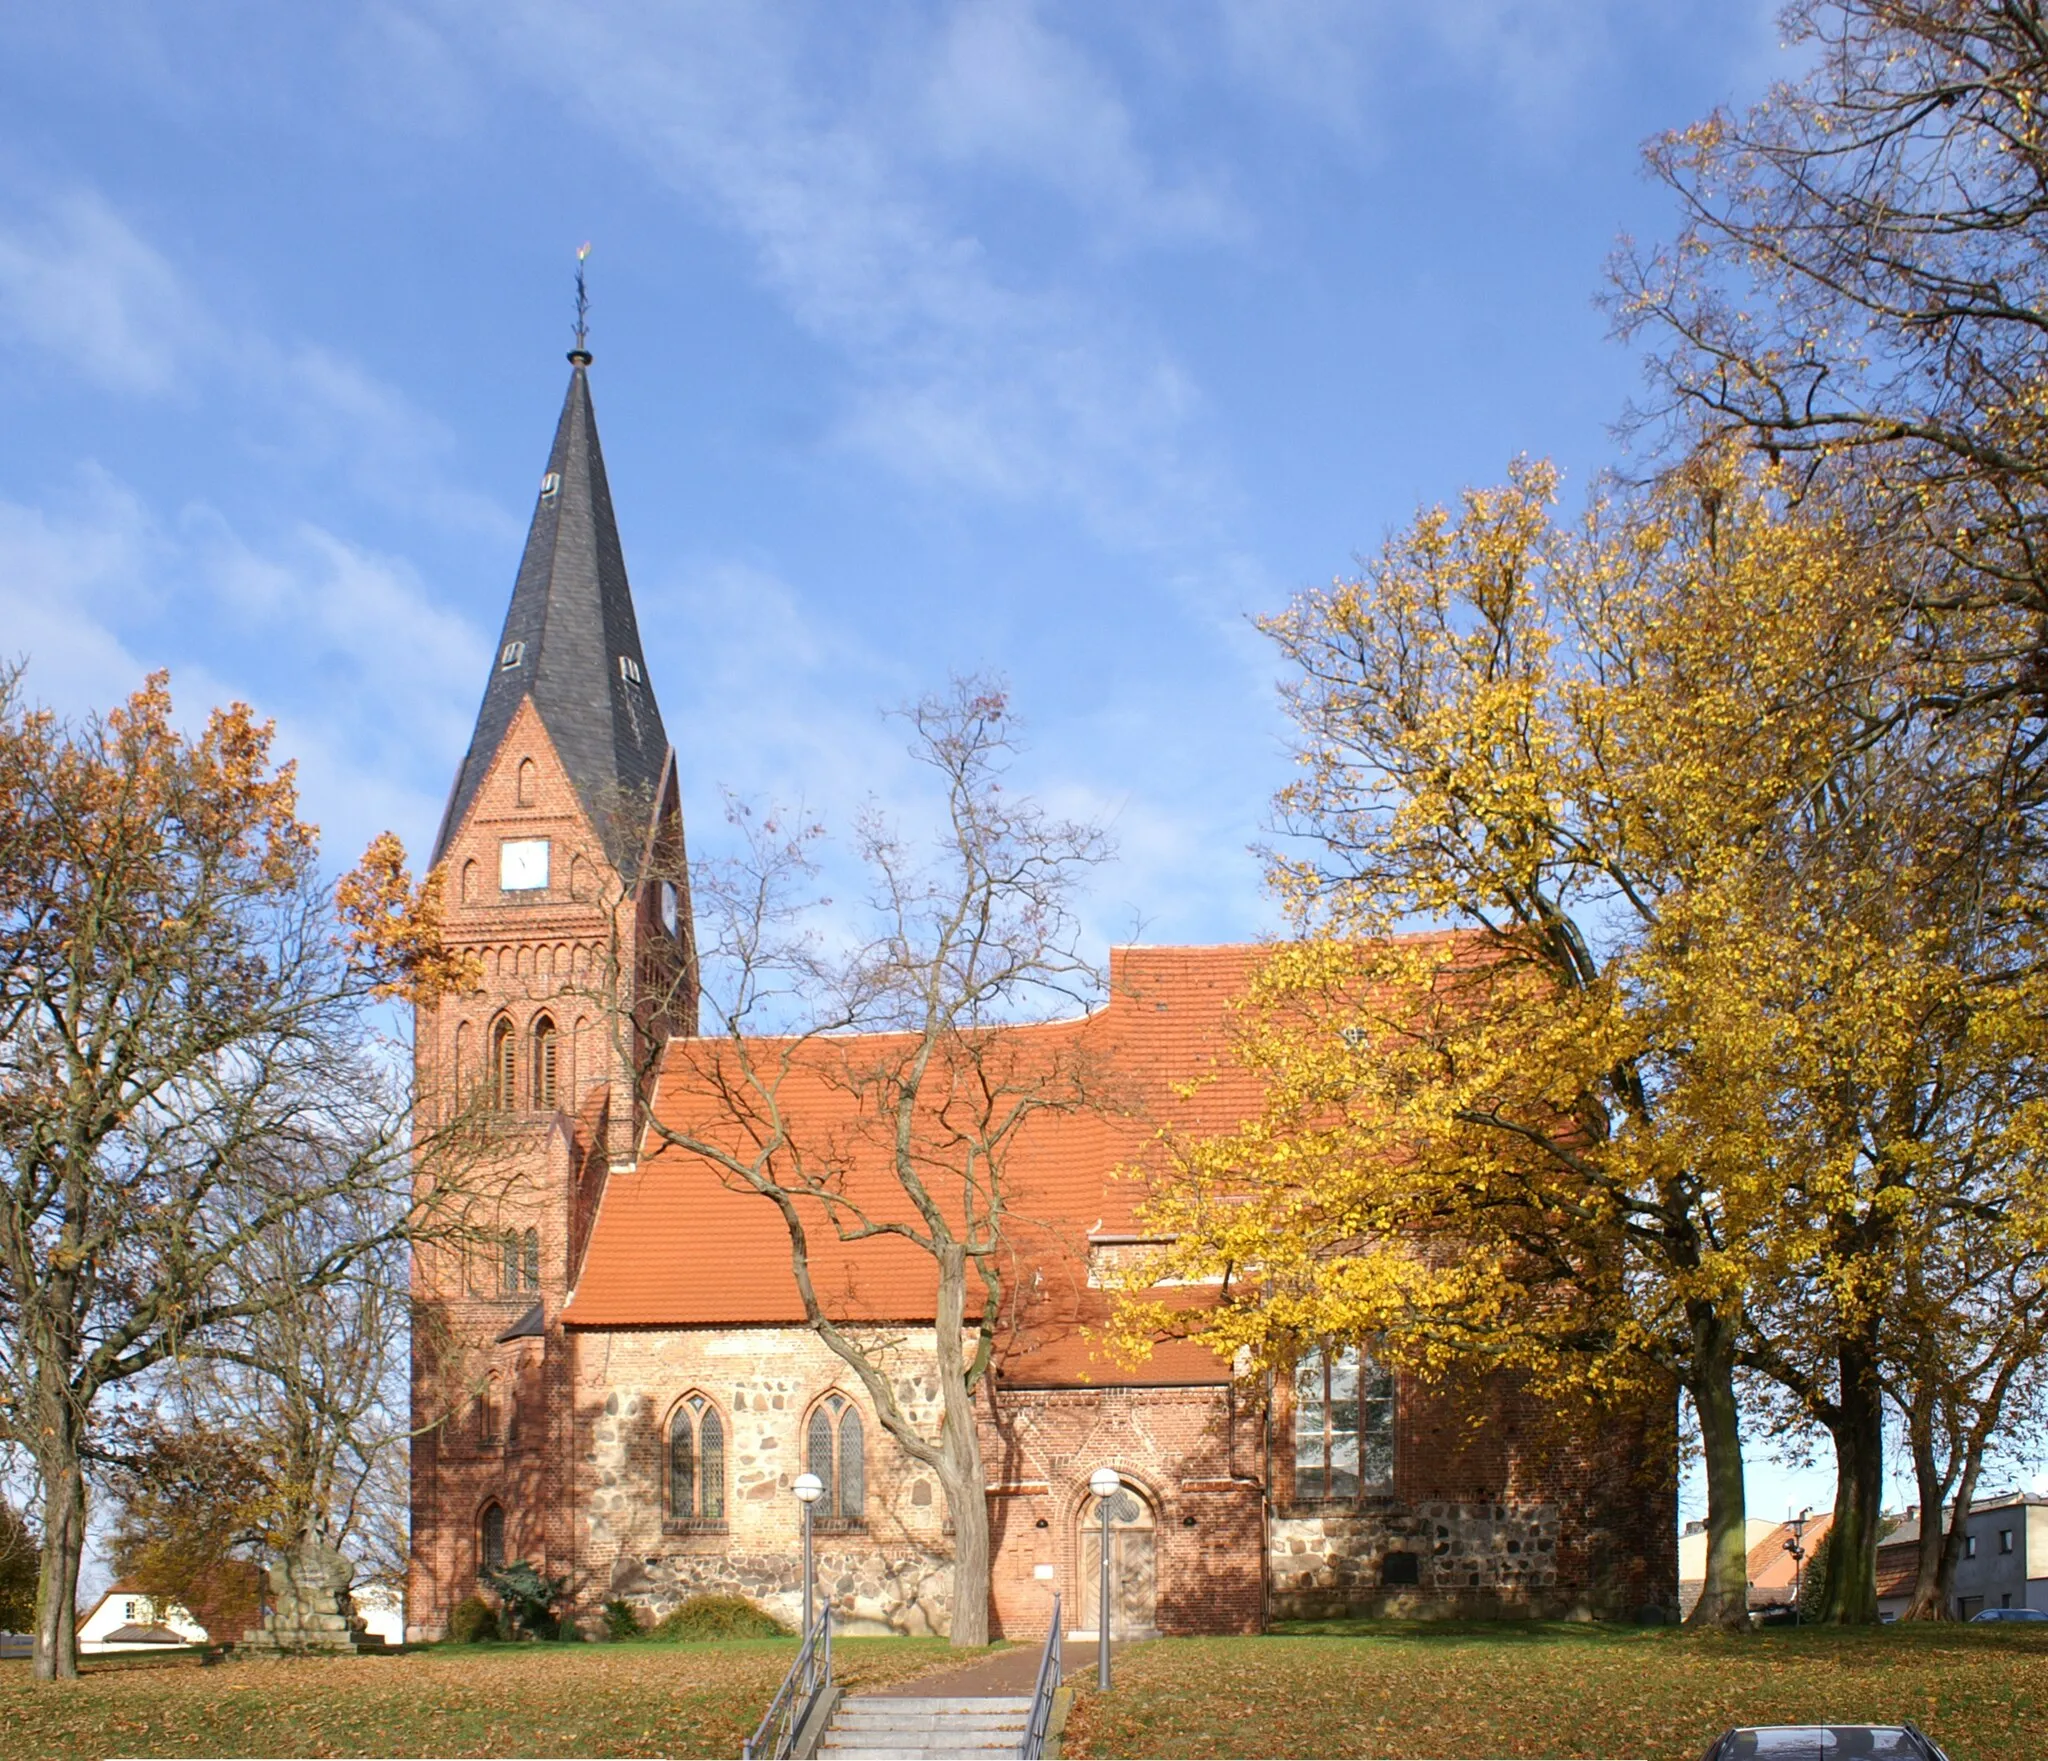 Image of Ribnitz-Damgarten